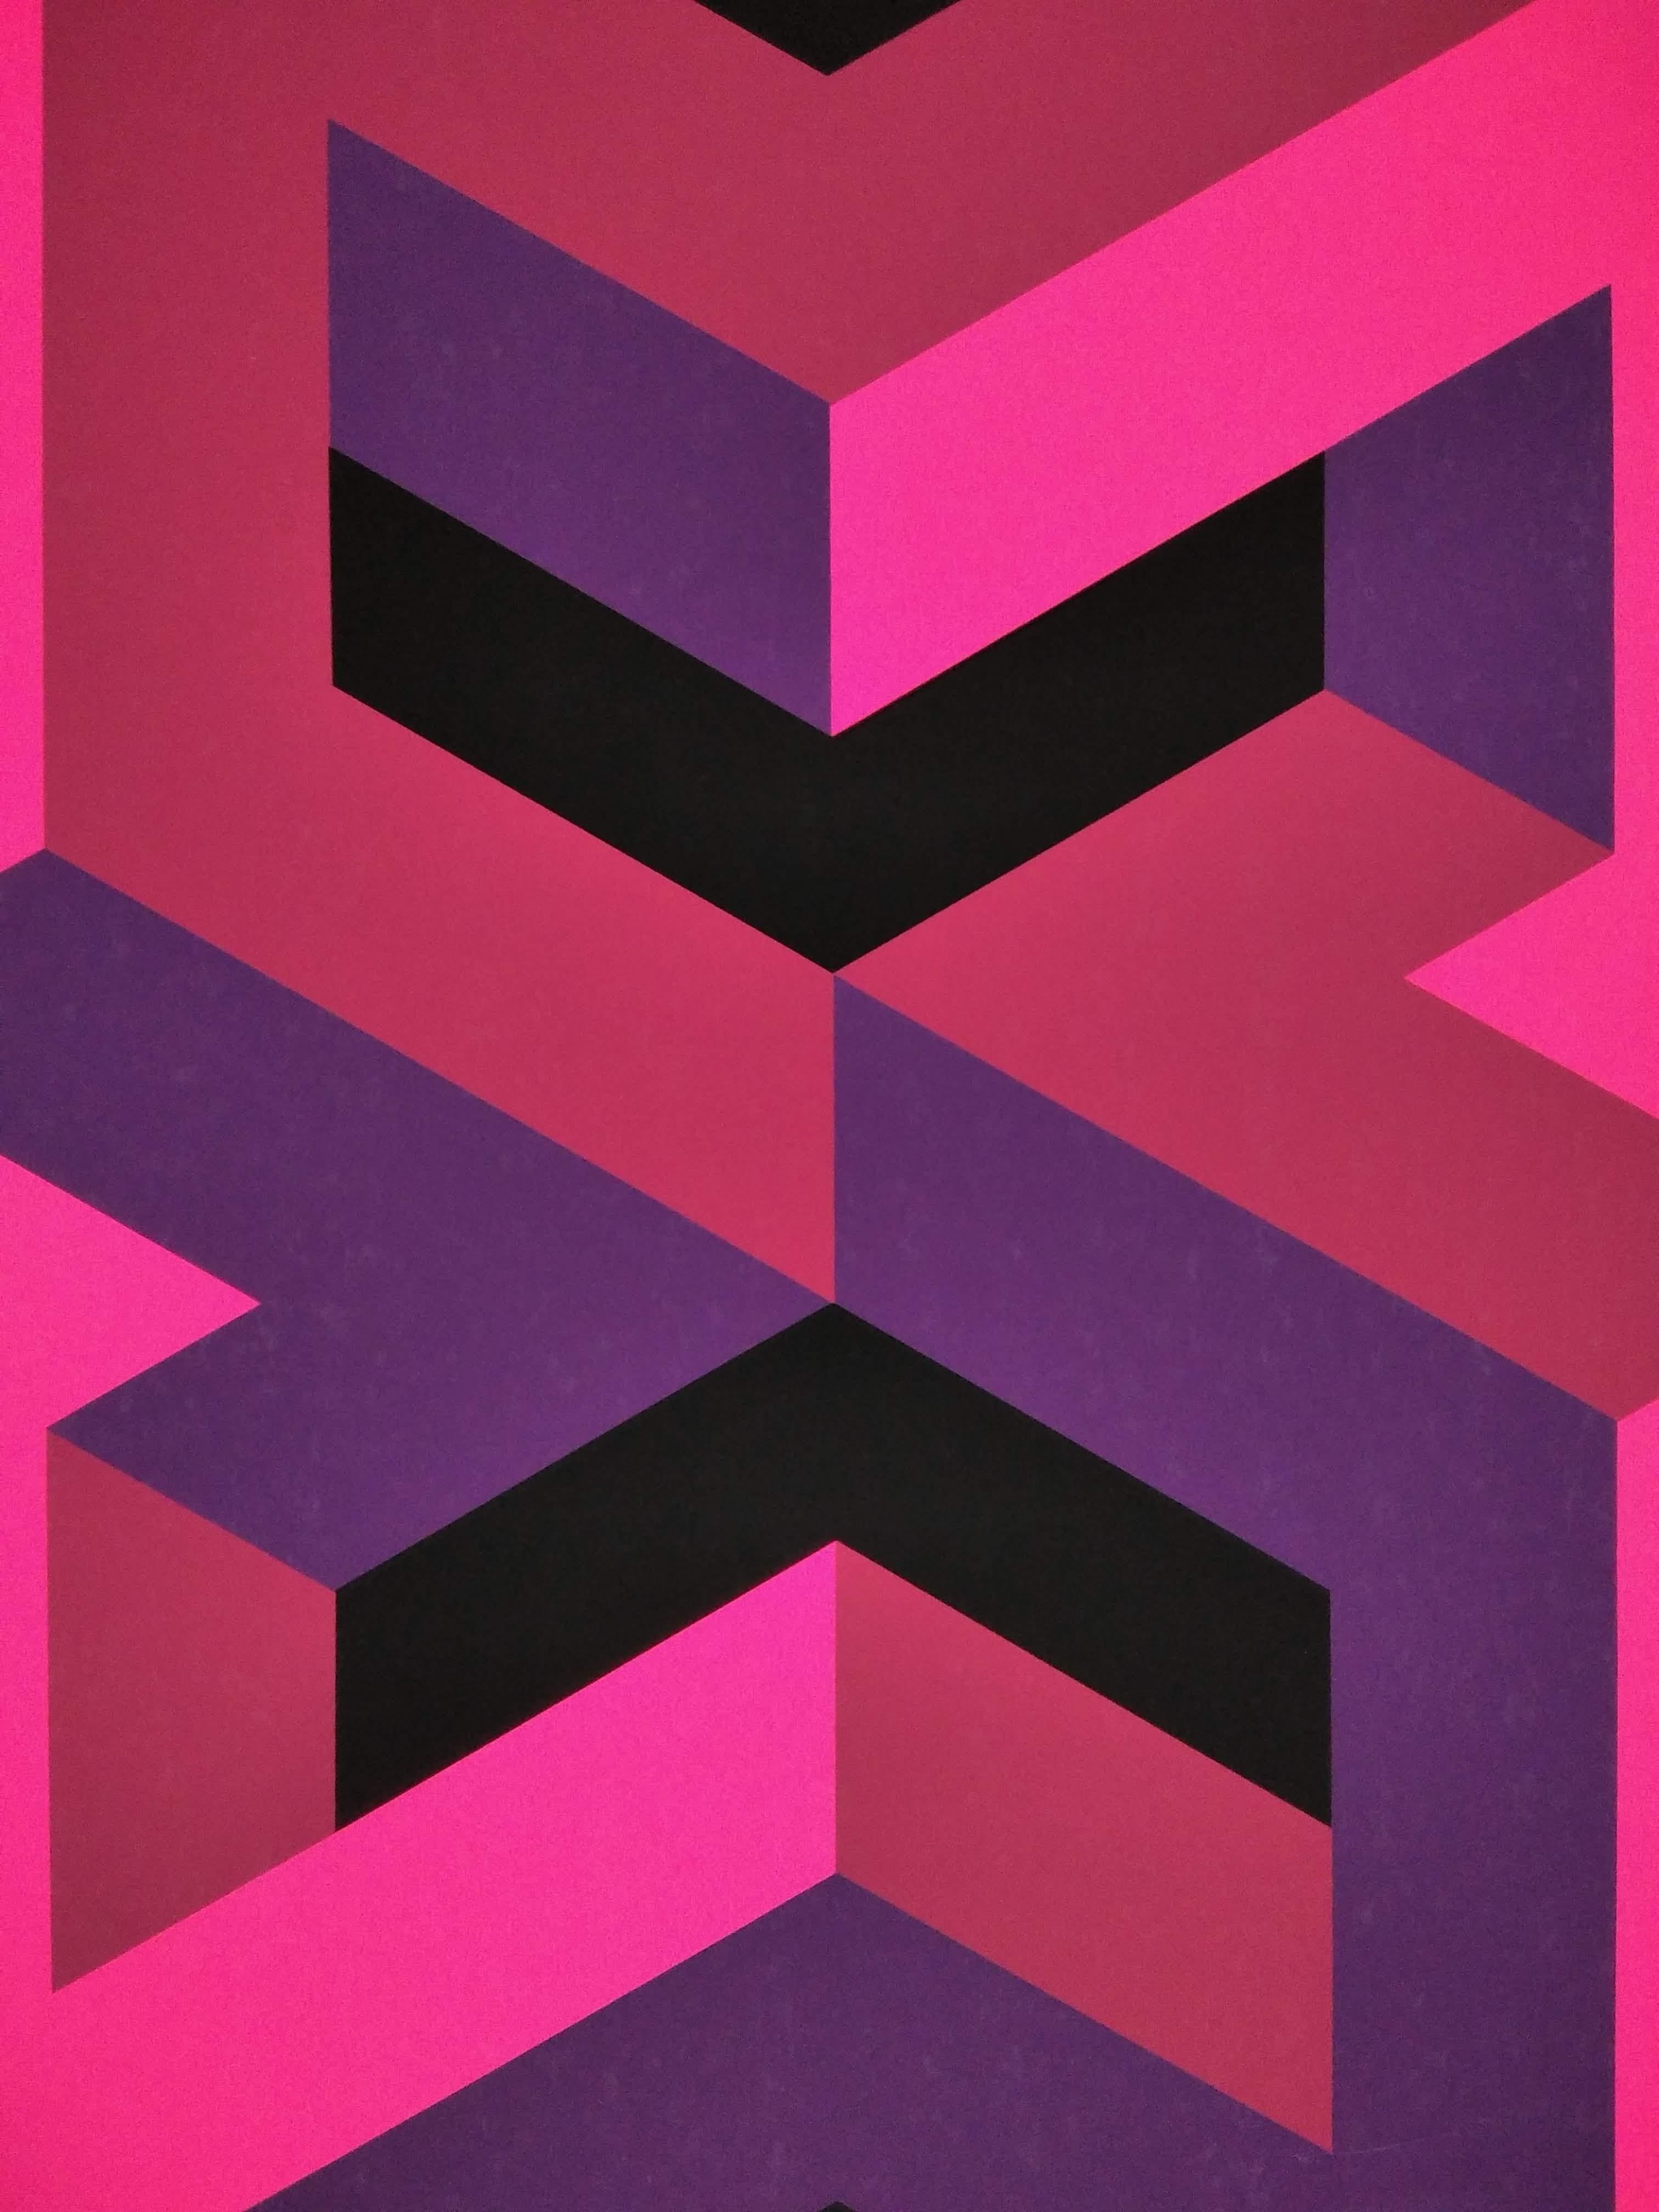 Untitled - Abstract Geometric Print by José María Yturralde